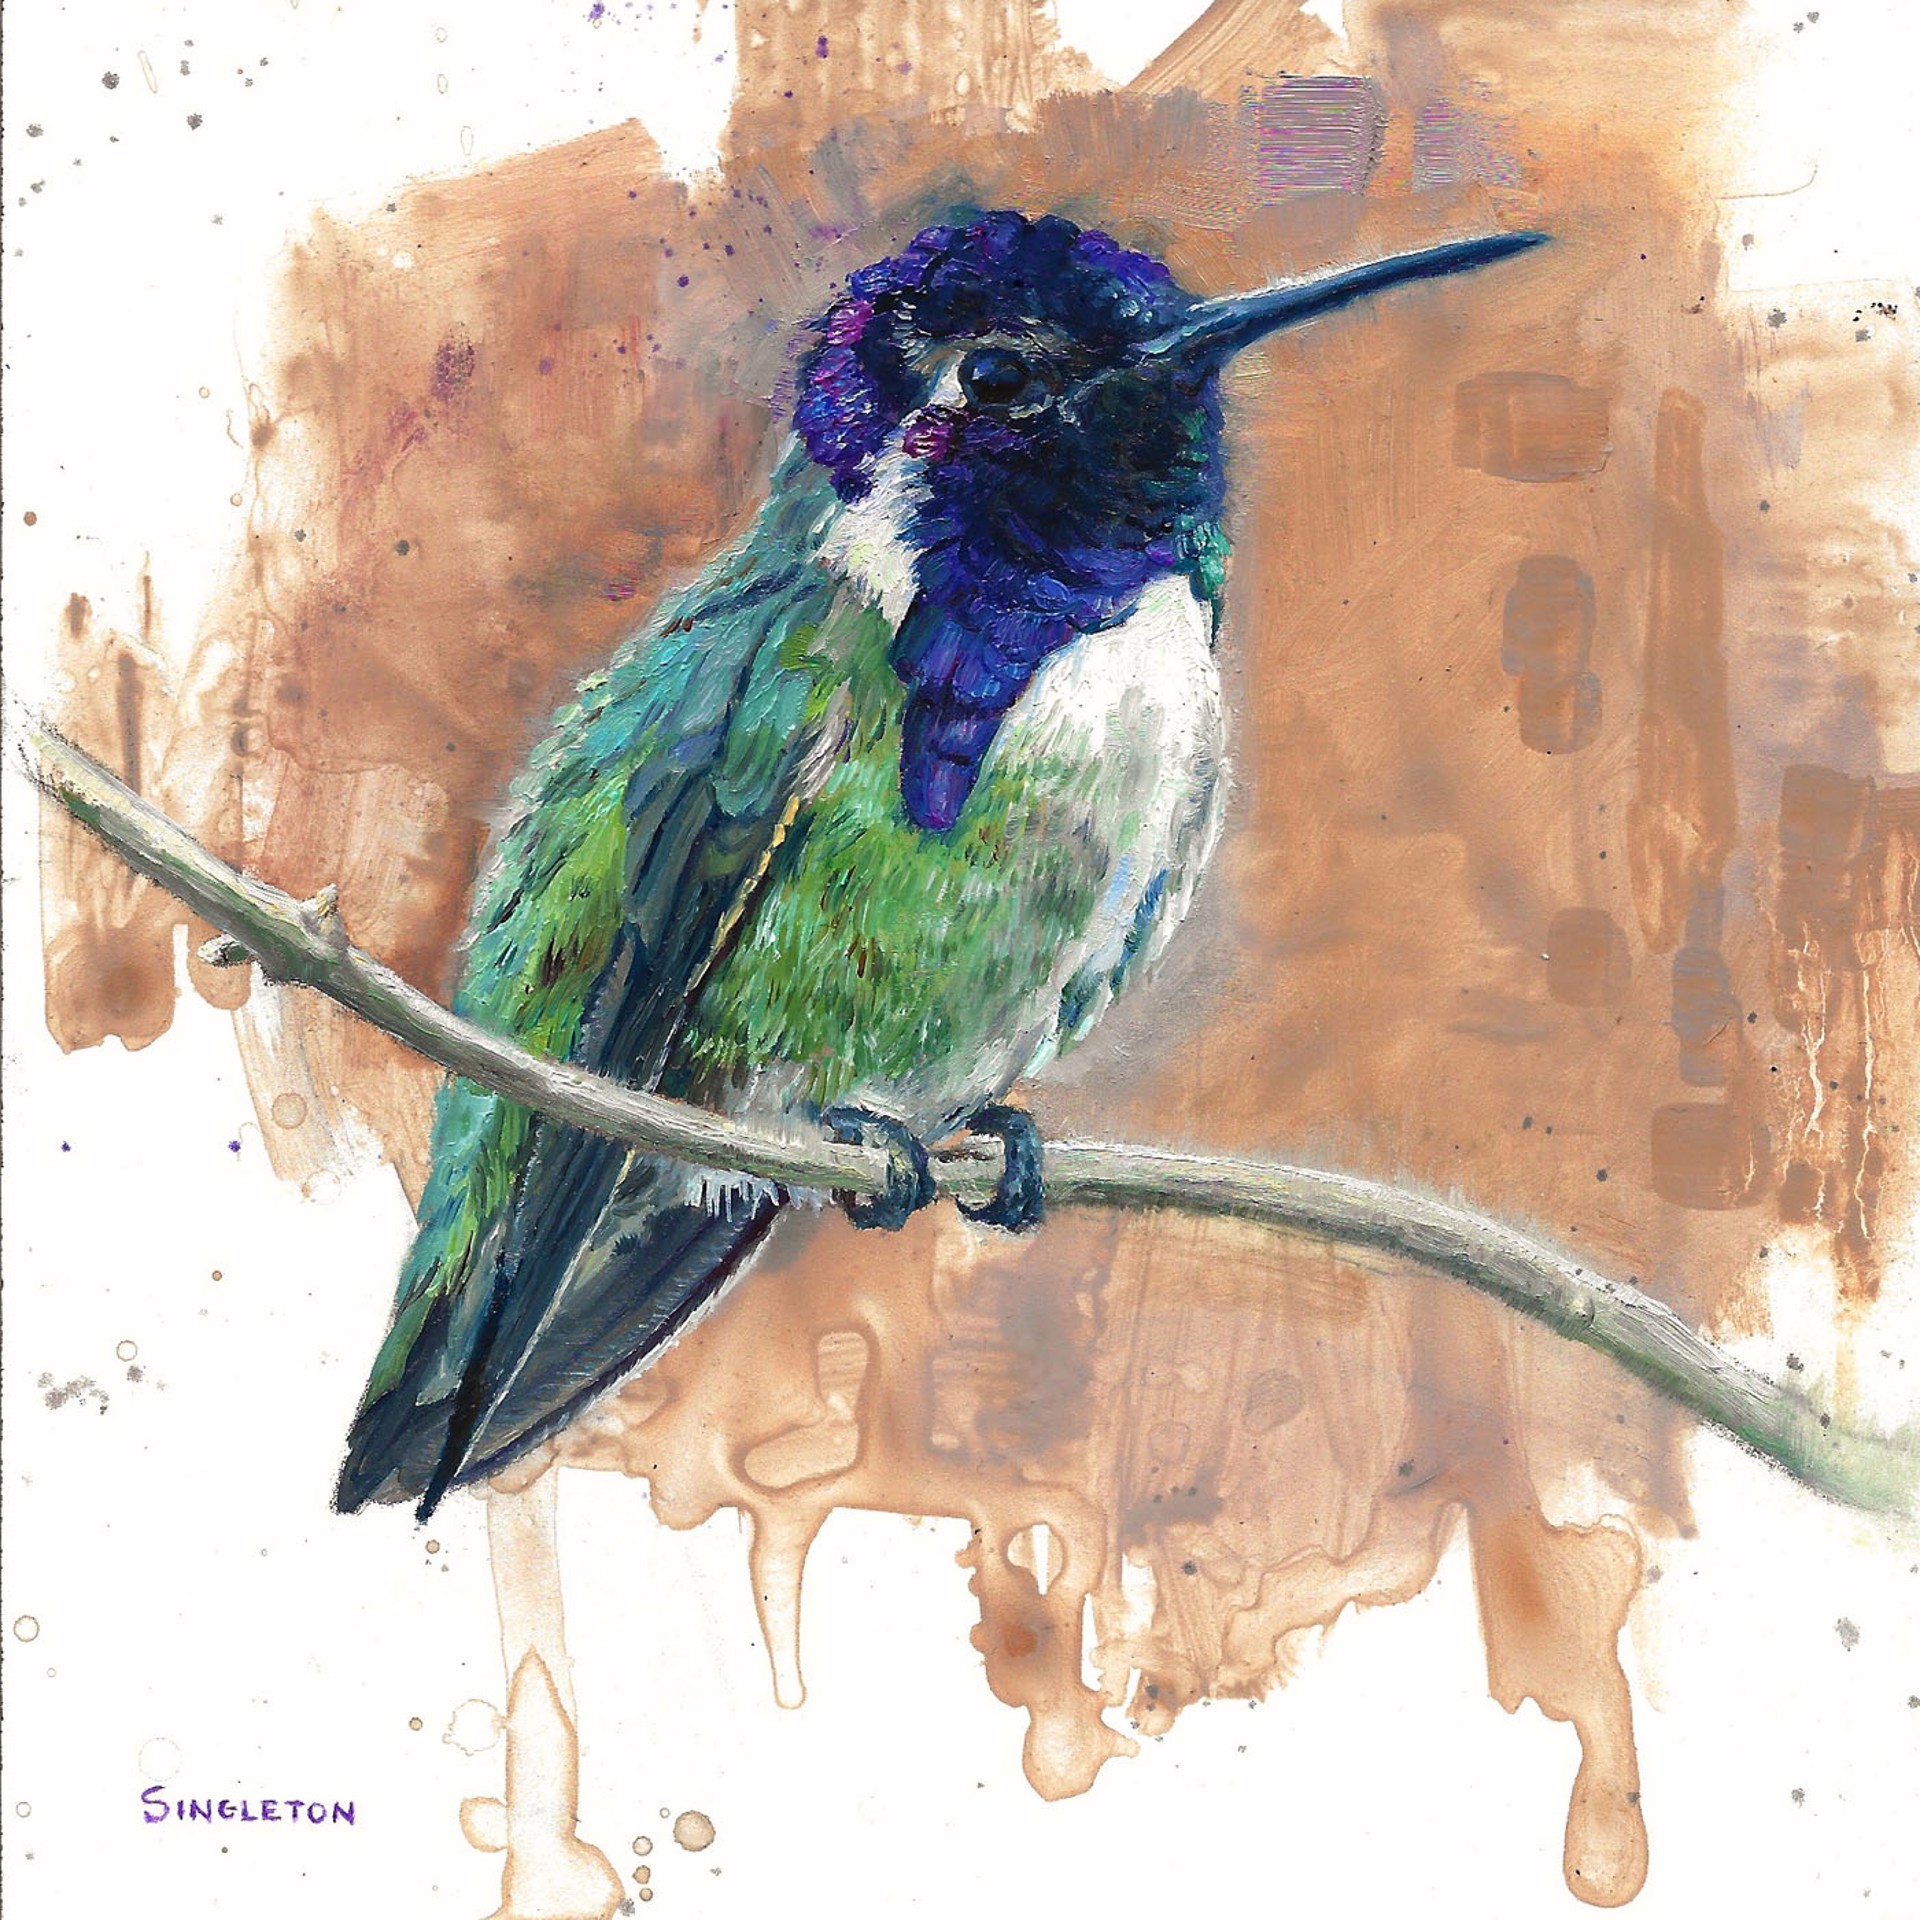 COSTA'S HUMMINGBIRD by Kelly Singleton